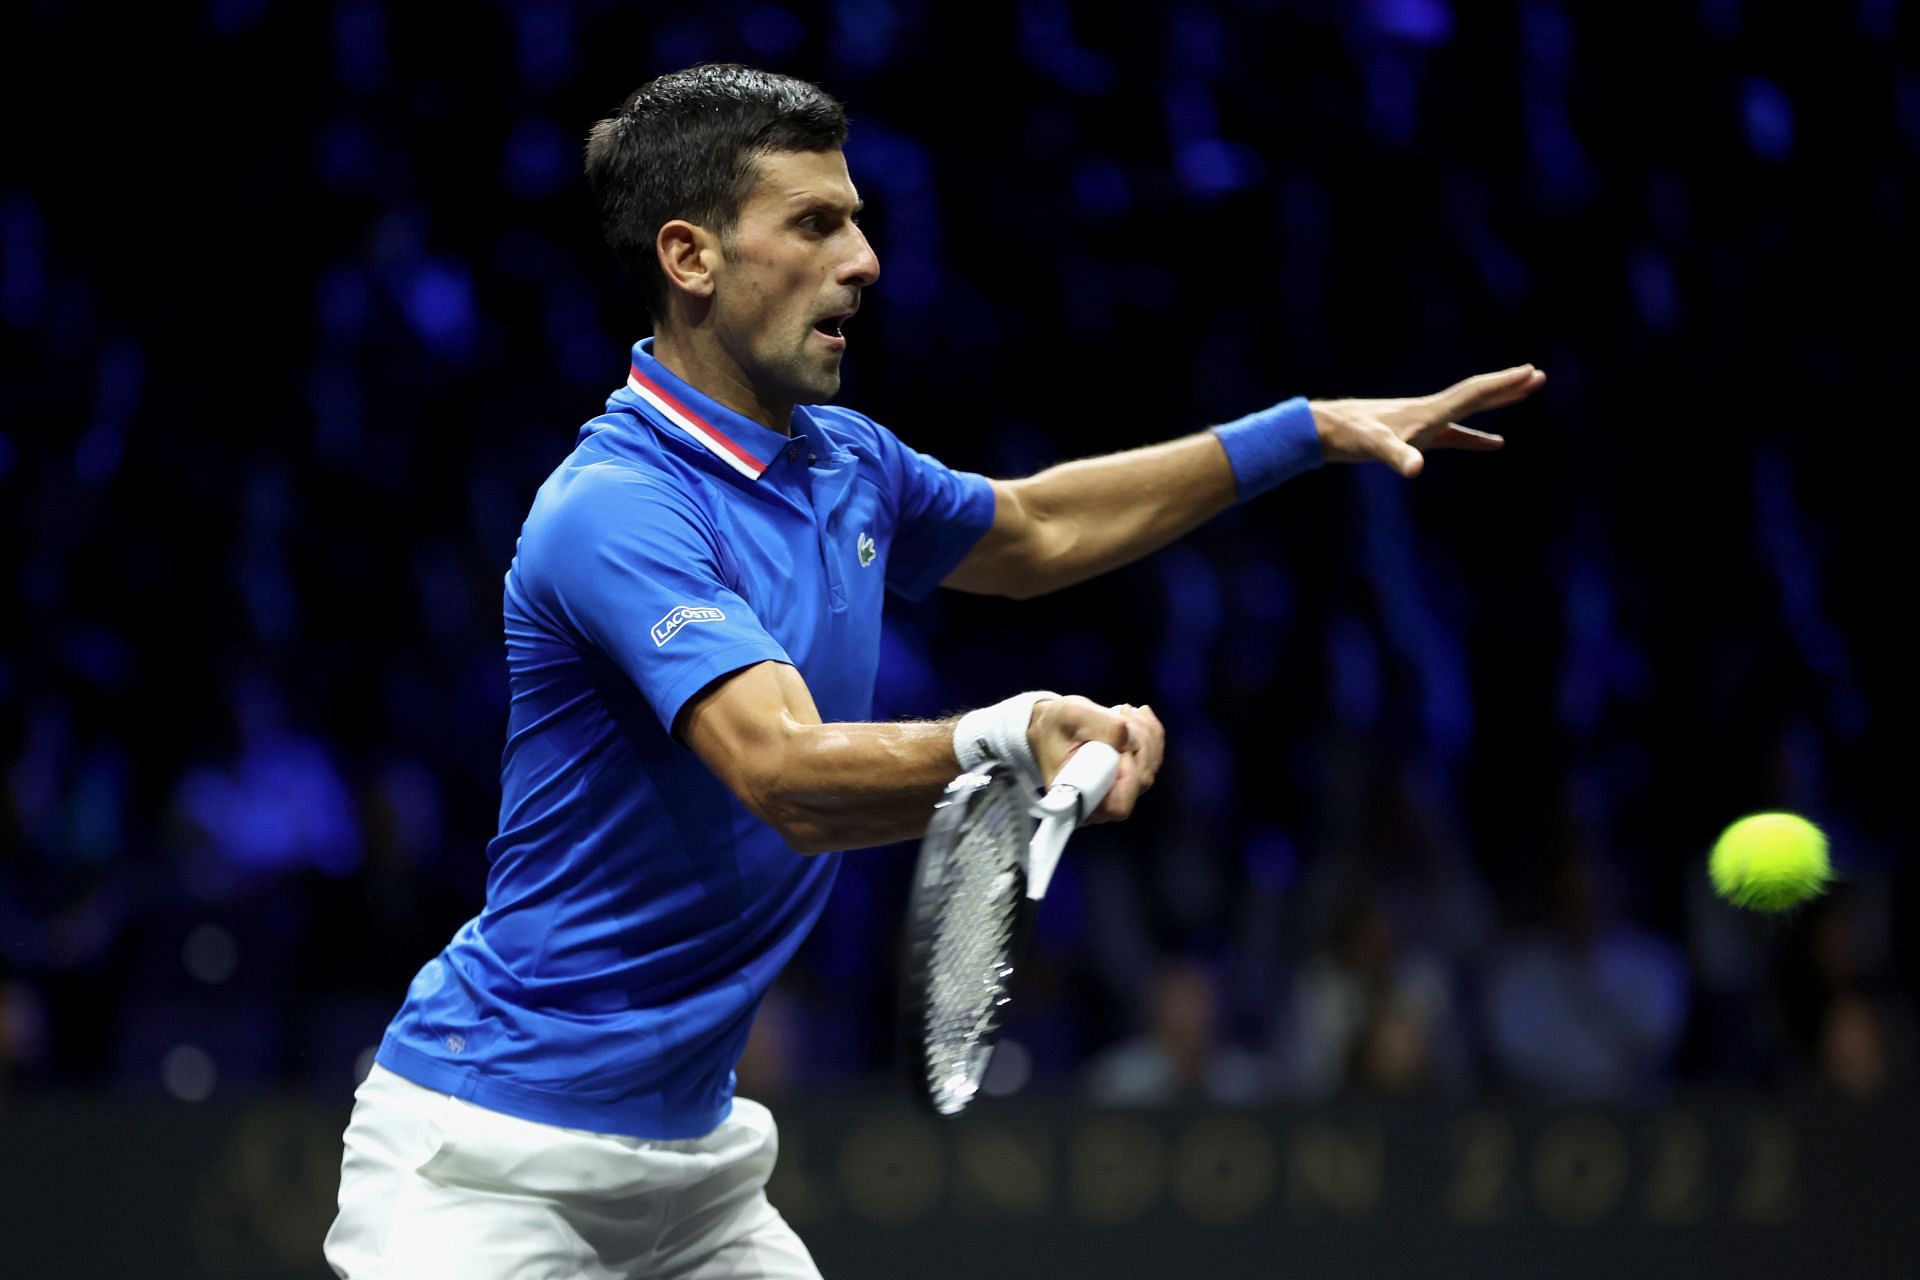 Novak Djokovic has not played a lot of tennis so far this season